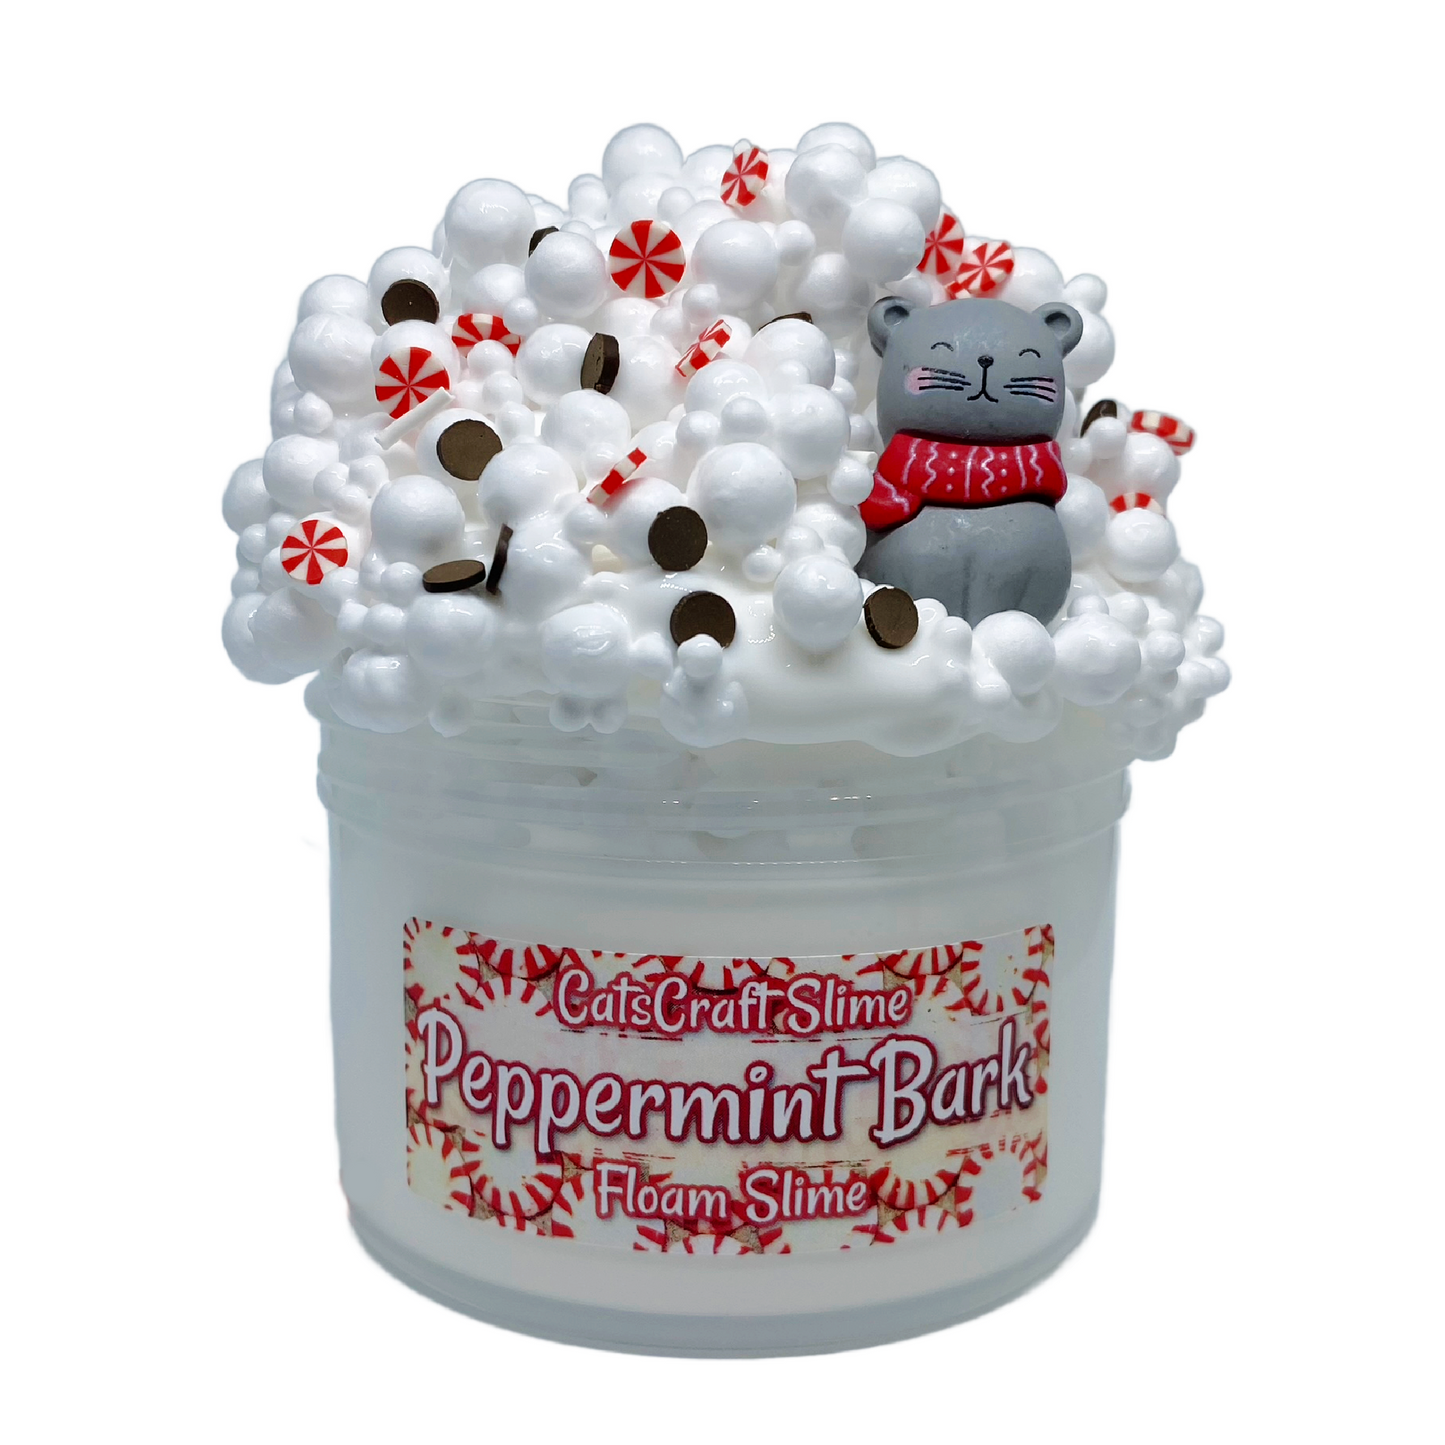 Jumbo Floam Slime "Peppermint Bark" SCENTED crunchy ASMR foam beads with cat charm